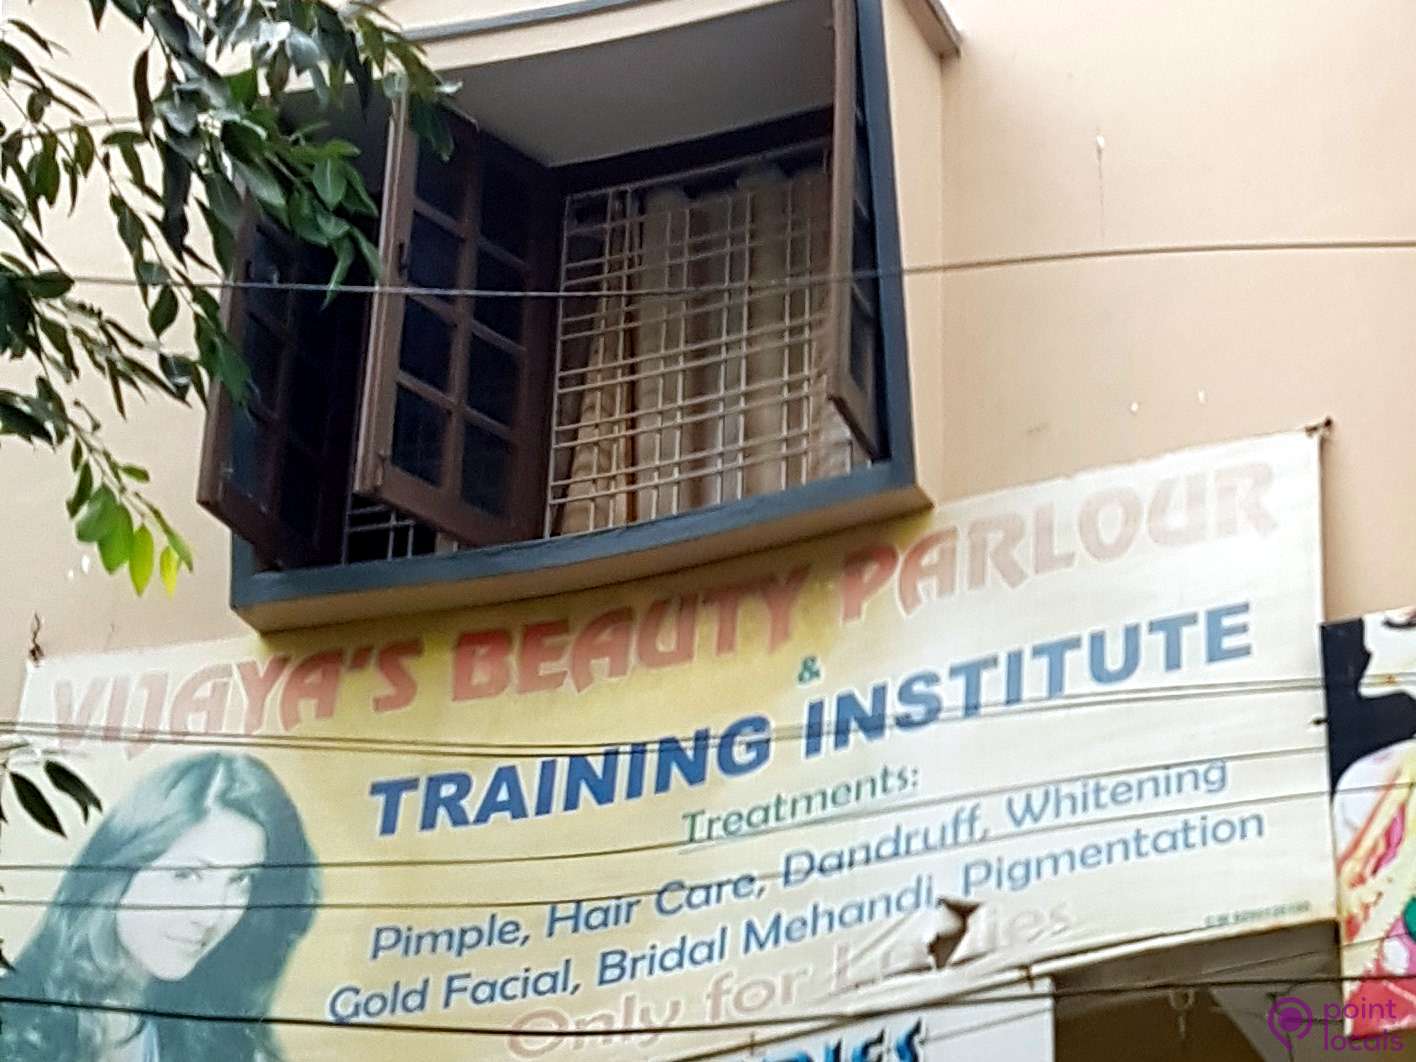 Vijaya's Beauty Parlour - Beautician Training Center in Hyderabad,Telangana  | Pointlocals